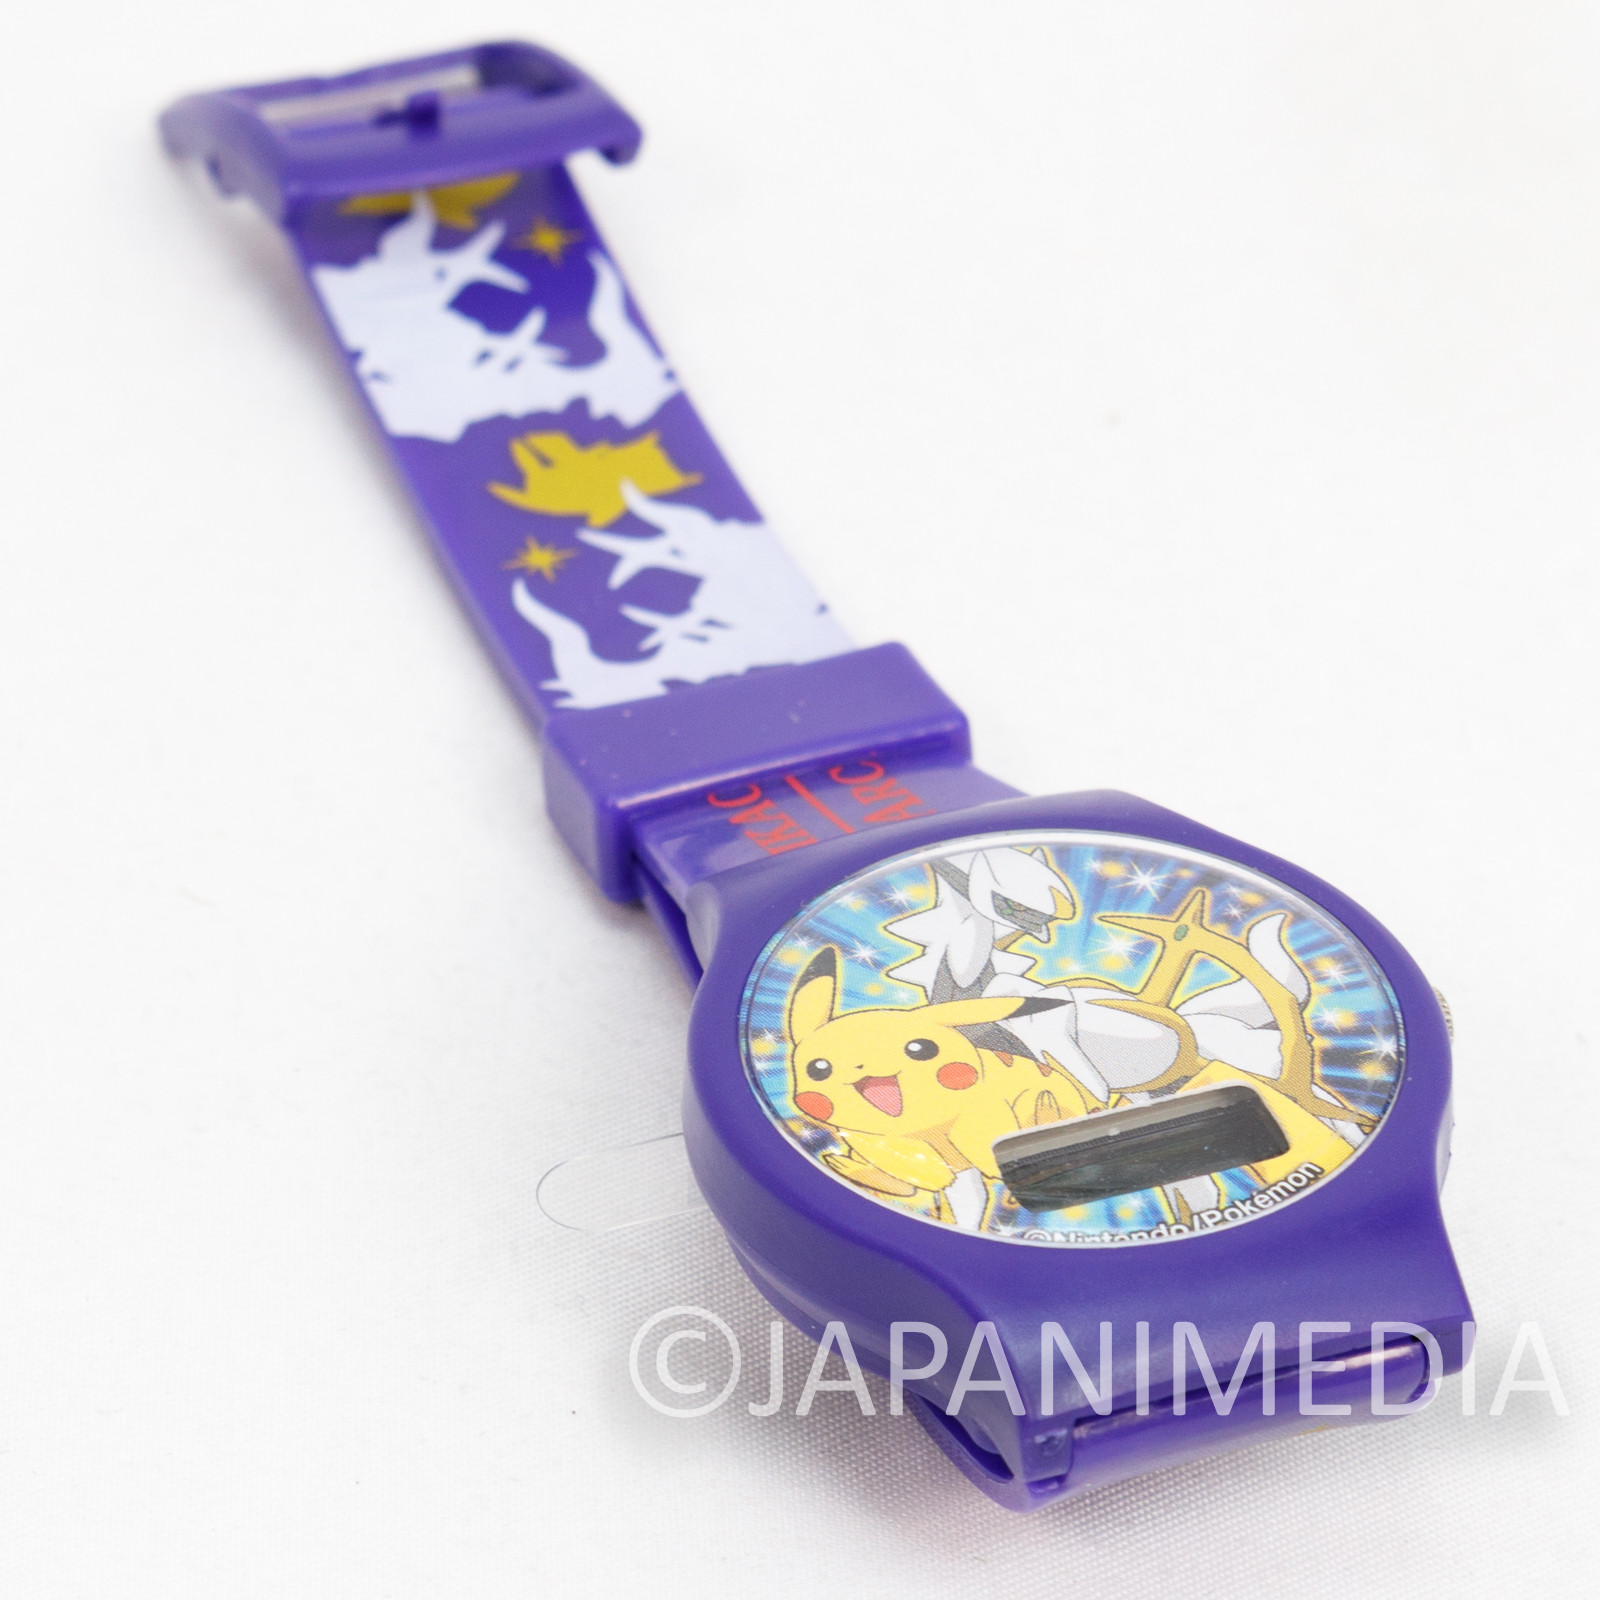 Pokemon Diamond & Pearl Digital Wrist Watch Toy #1 JAPAN ANIME